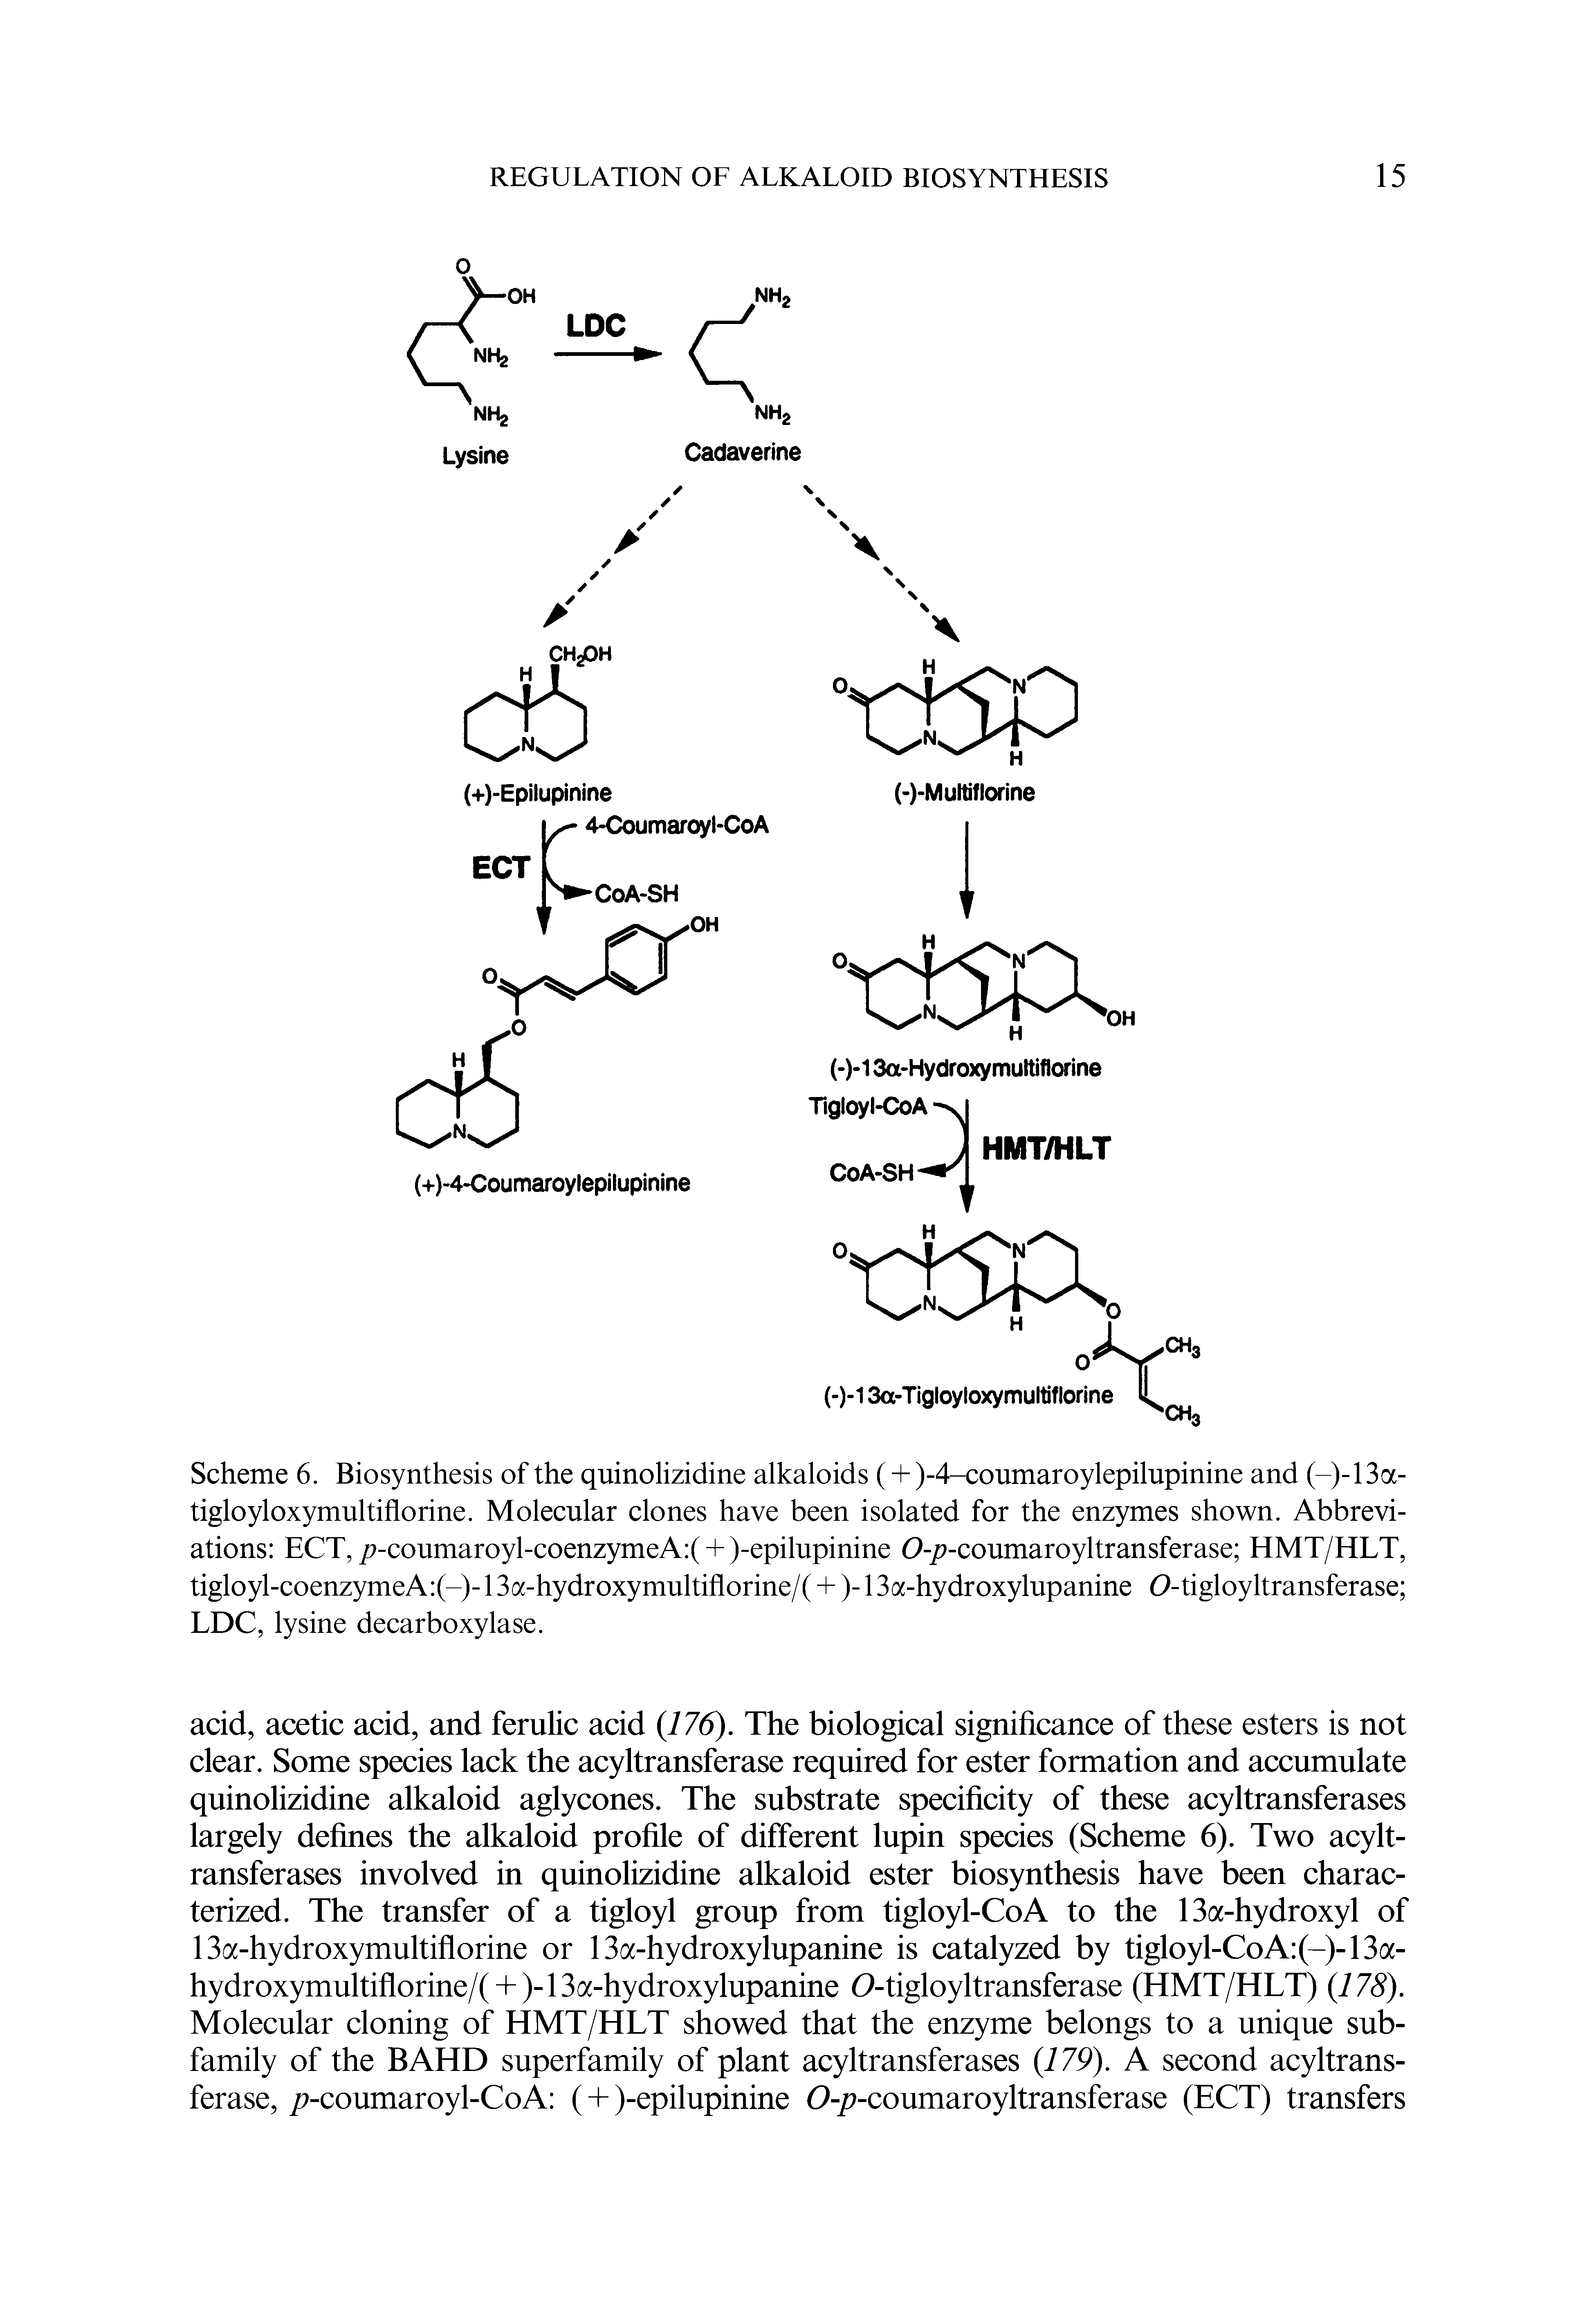 Scheme 6. Biosynthesis of the quinolizidine alkaloids (+ )-4-coumaroylepilupinine and (-)-13a-tigloyloxymultiflorine. Molecular clones have been isolated for the enzymes shown. Abbreviations ECT,/7-coumaroyl-coenzymeA ( + )-epilupinine 0-/ -coumaroyltransferase HMT/HLT, tigloyl-coenzymeA (-)-13a-hydroxymultiflorine/( +)-13a-hydroxylupanine 0-tigloyltransferase LDC, lysine decarboxylase.